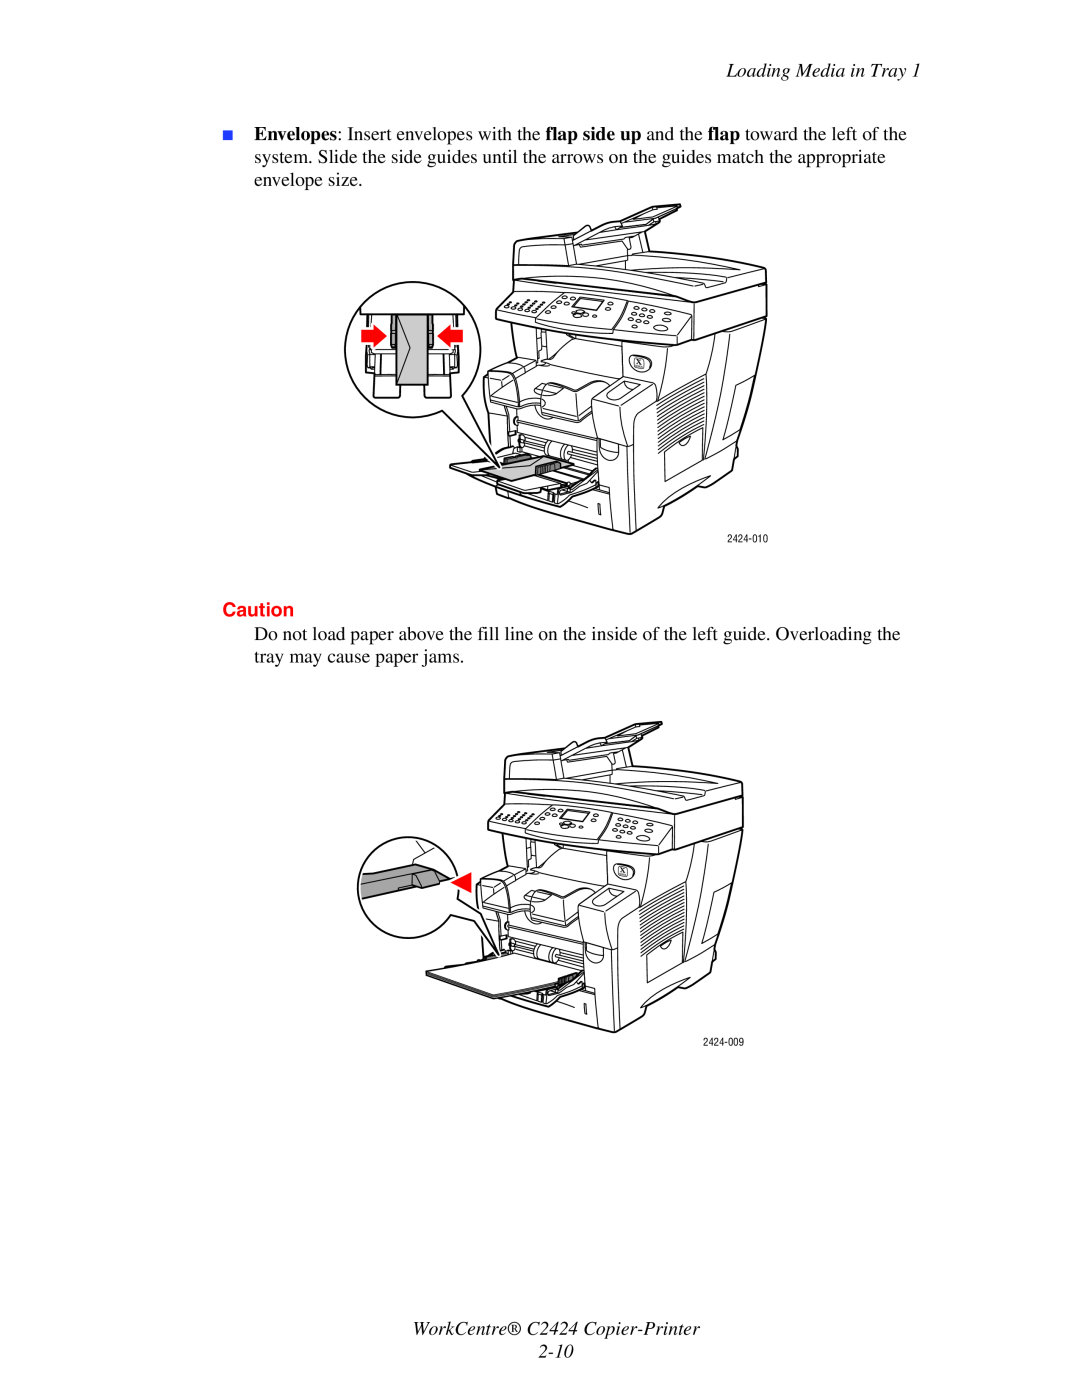 Xerox manual WorkCentre C2424 Copier-Printer, Loading Media in Tray 